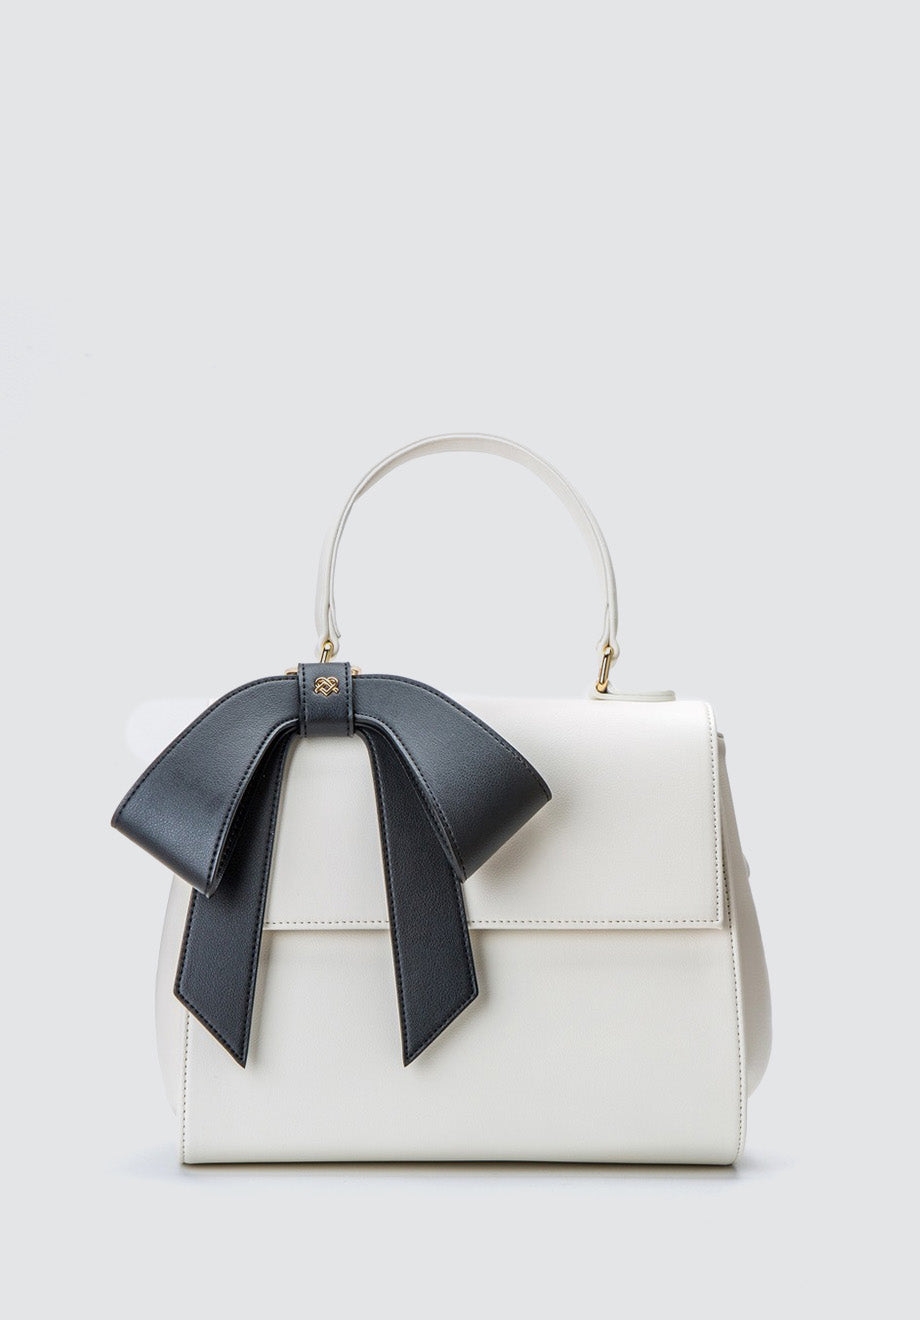 Cottontail | White & Black Vegan Leather Bag